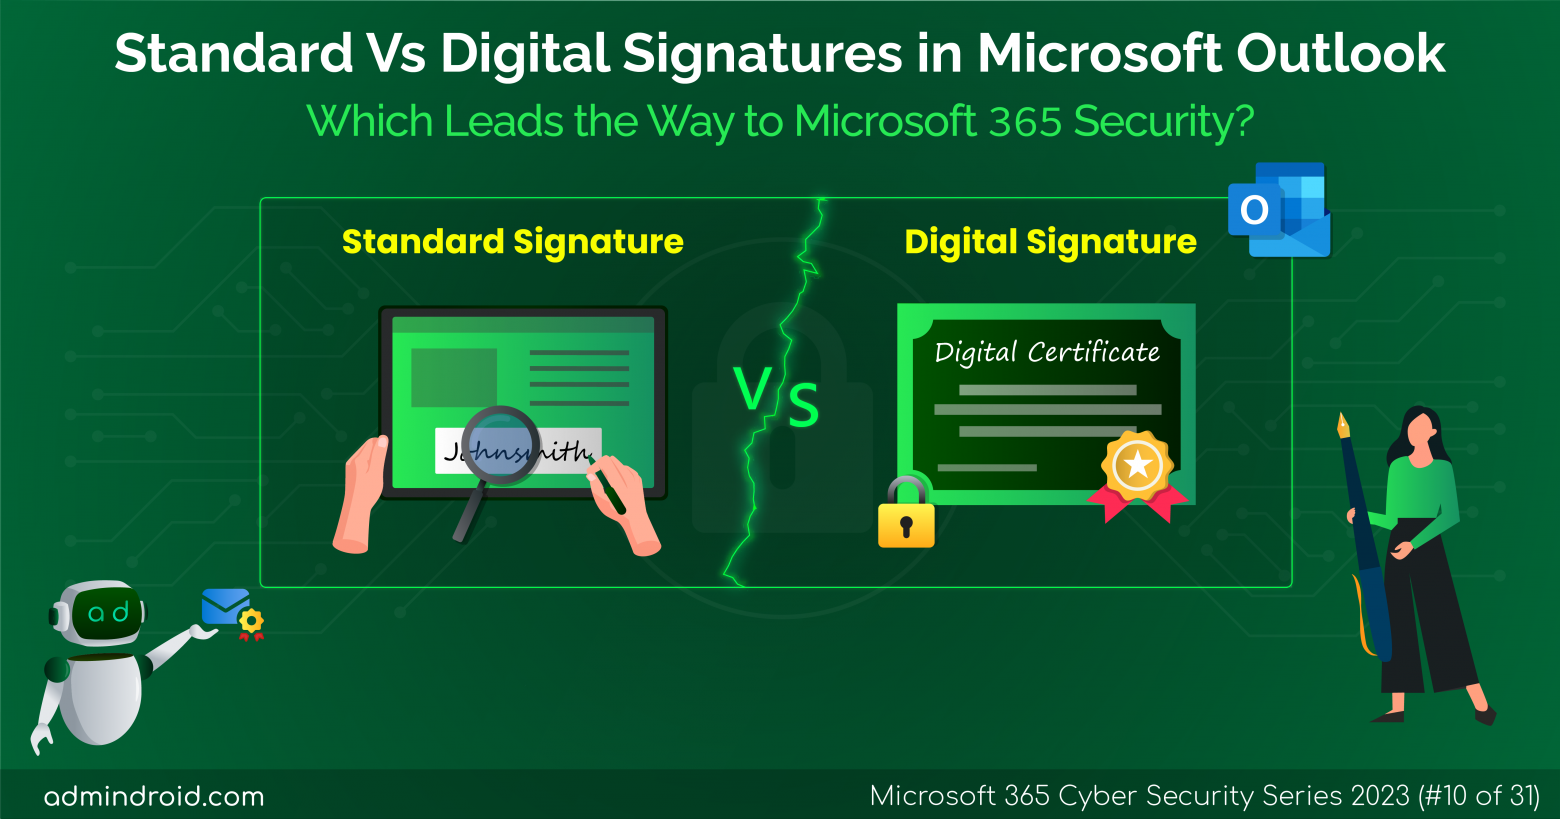 Standard Vs Digital Signatures in Microsoft Outlook